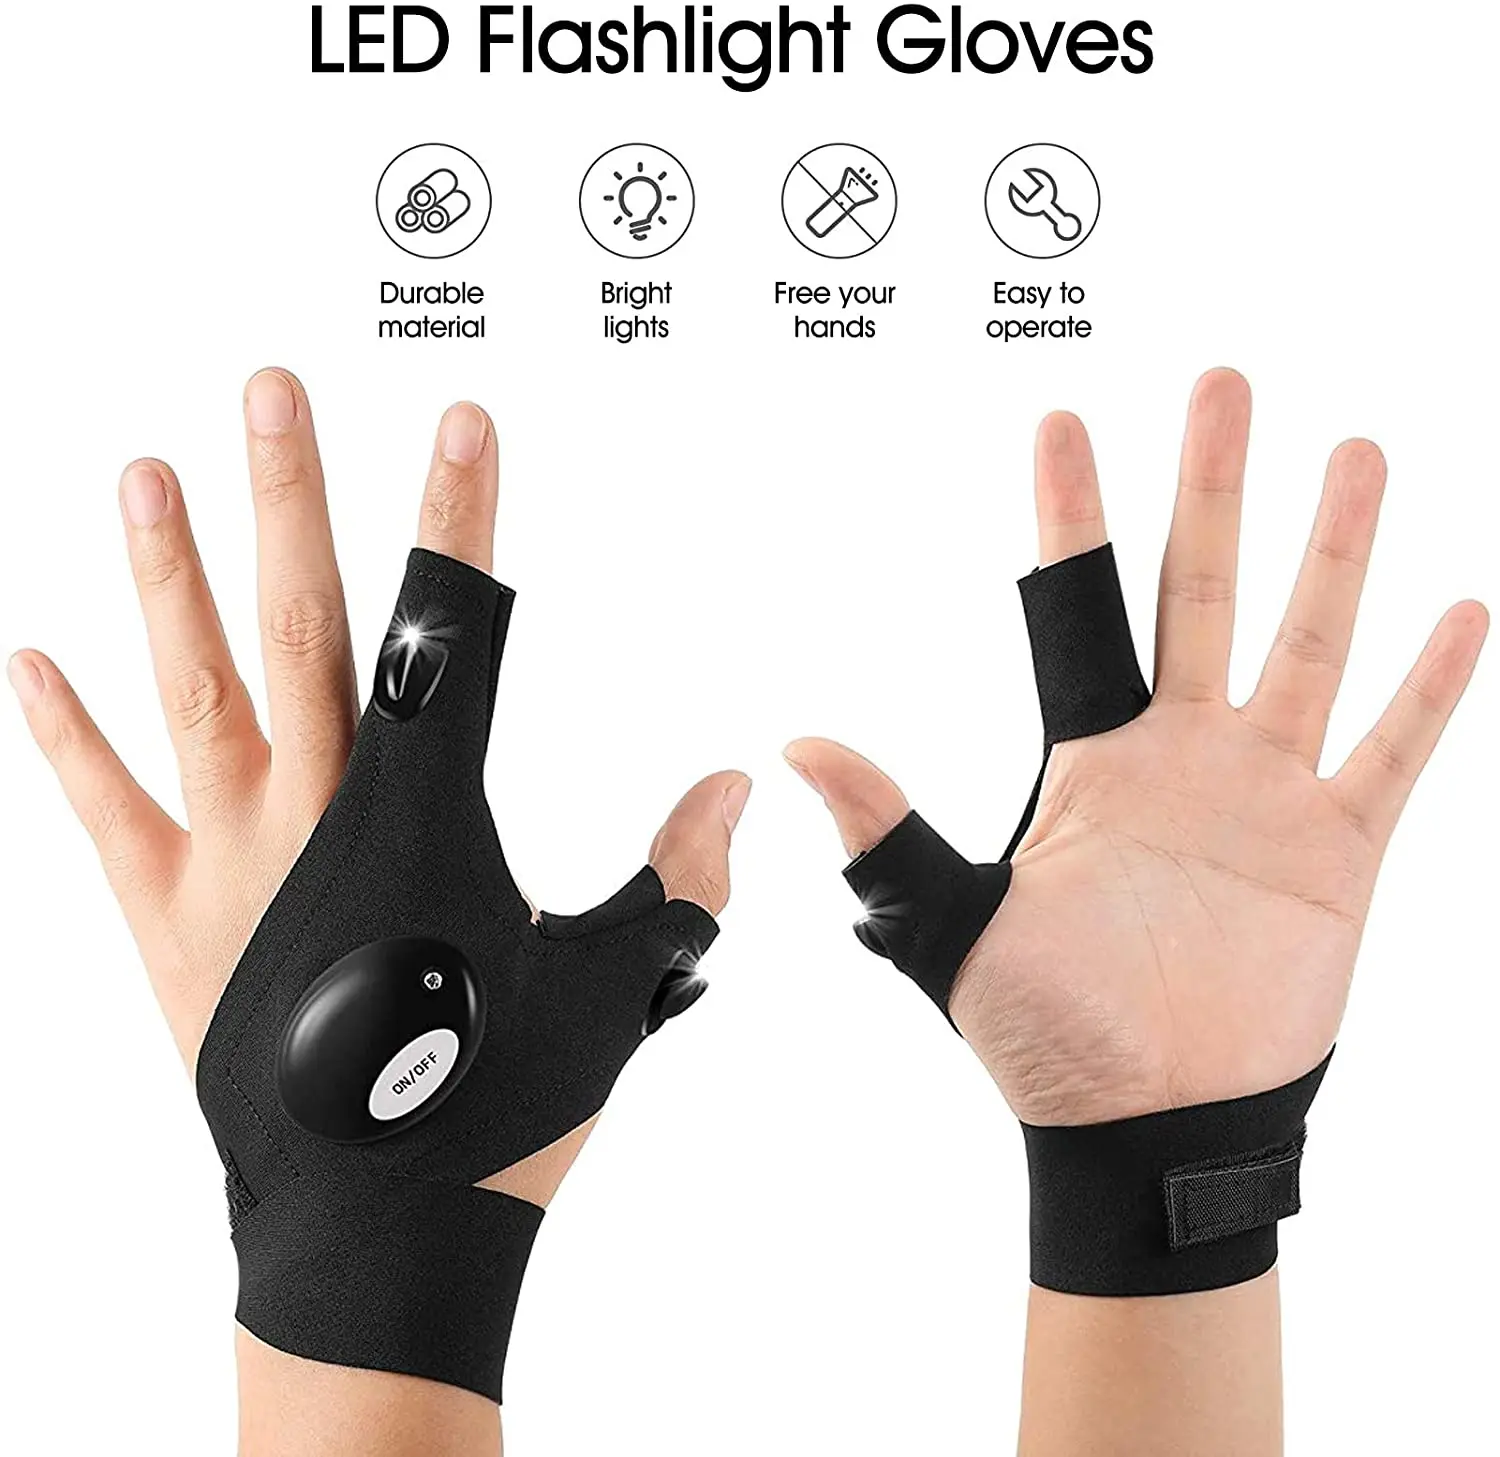 

1lot LED Light Gloves Tools LED Flashlight Gloves Gadgets Gifts for Men Electrician, Dad Husband Handyman, Tactical Han